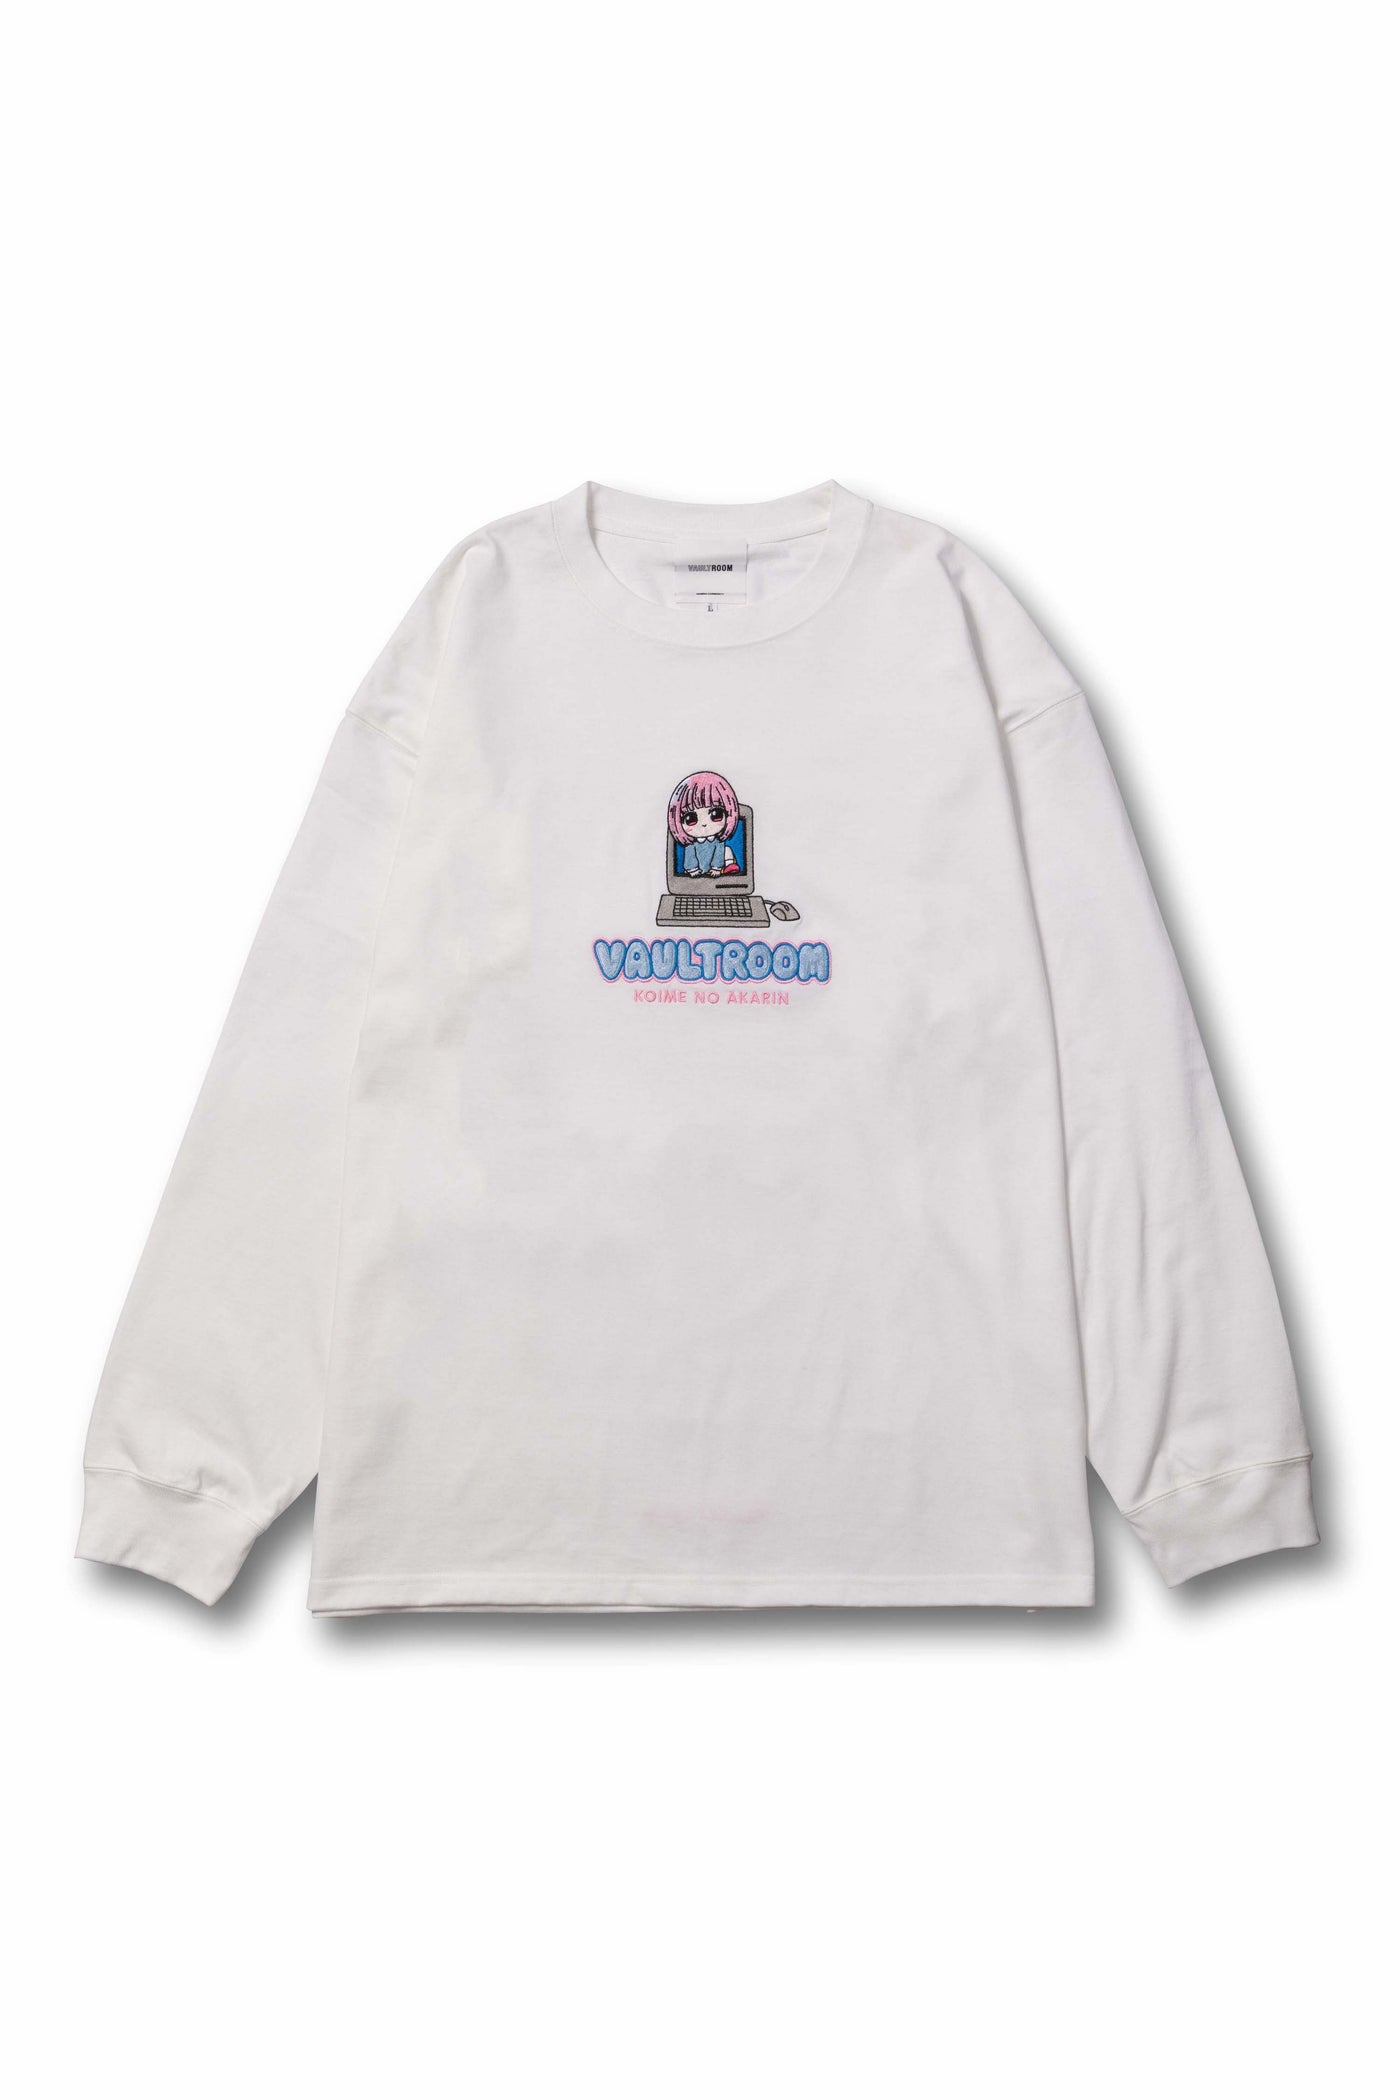 VR × CHEEKY BIG L/S TEE / blk vaultroom - Tシャツ/カットソー(七分